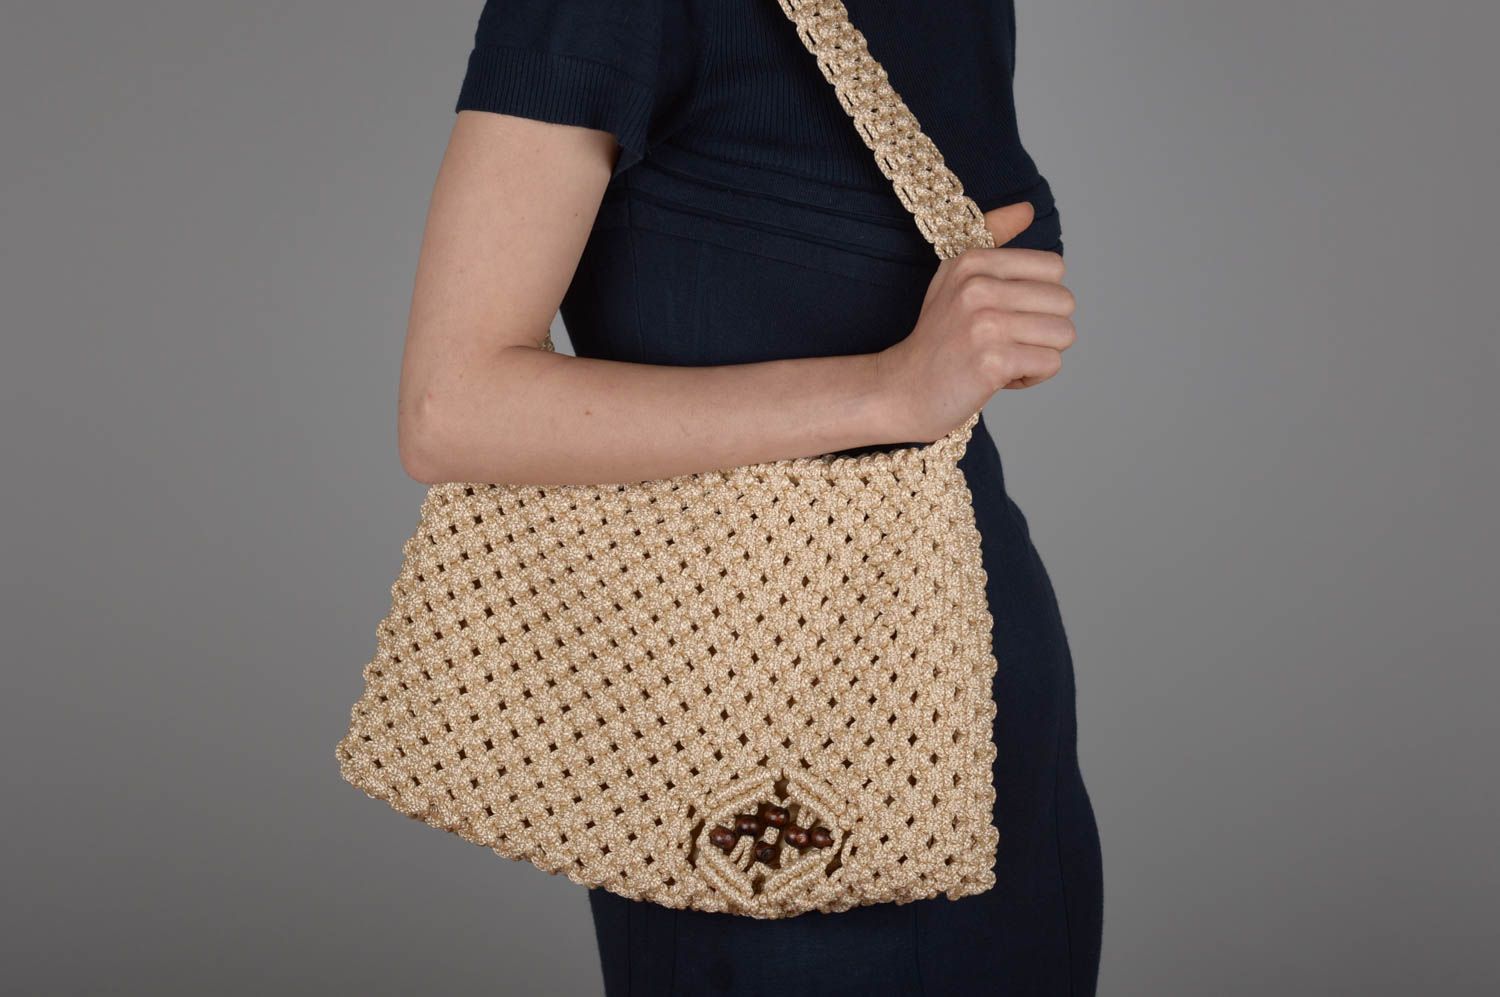 Handmade handbag macrame bag fashion accessories shoulder bag gifts for girl photo 5